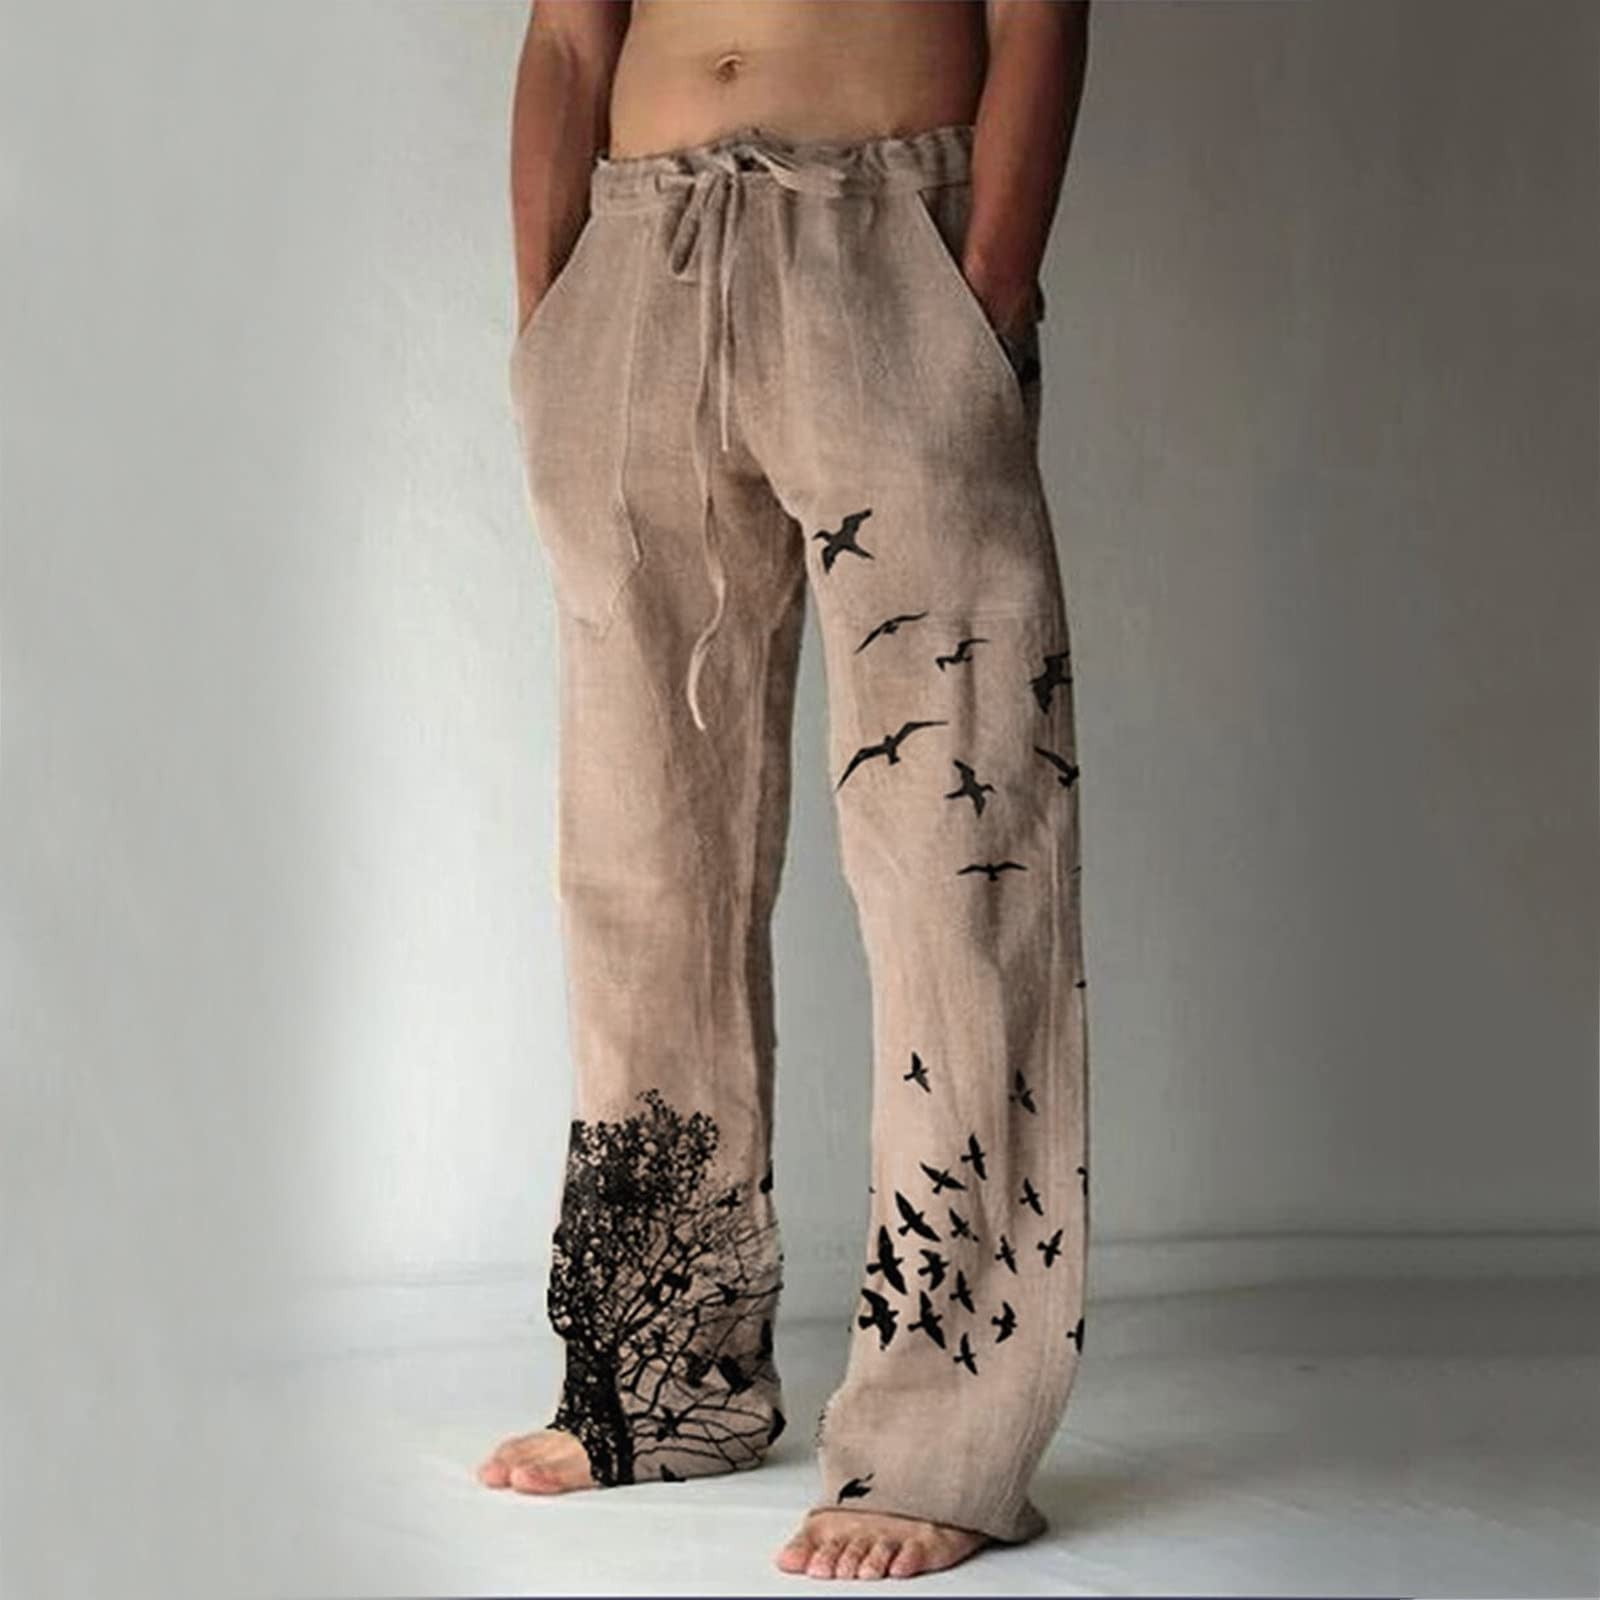 pafei tyugd Mens Cotton Linen Pants Elastic Drawstring Waist Lounge Jogger Yoga Pants Loose Casual Beach Home Pants 